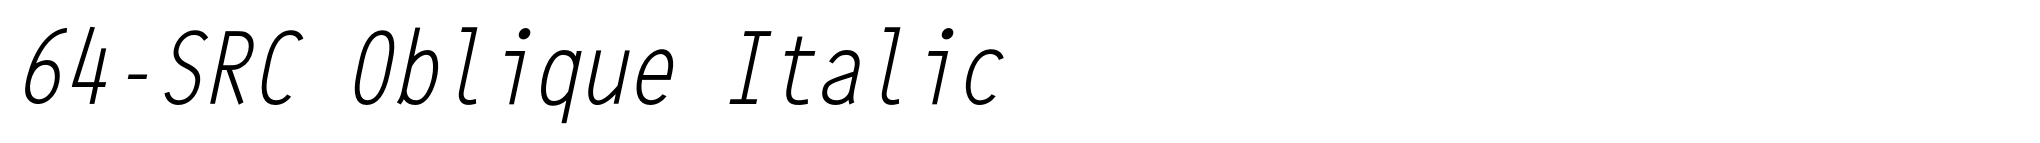 64-SRC Oblique Italic image